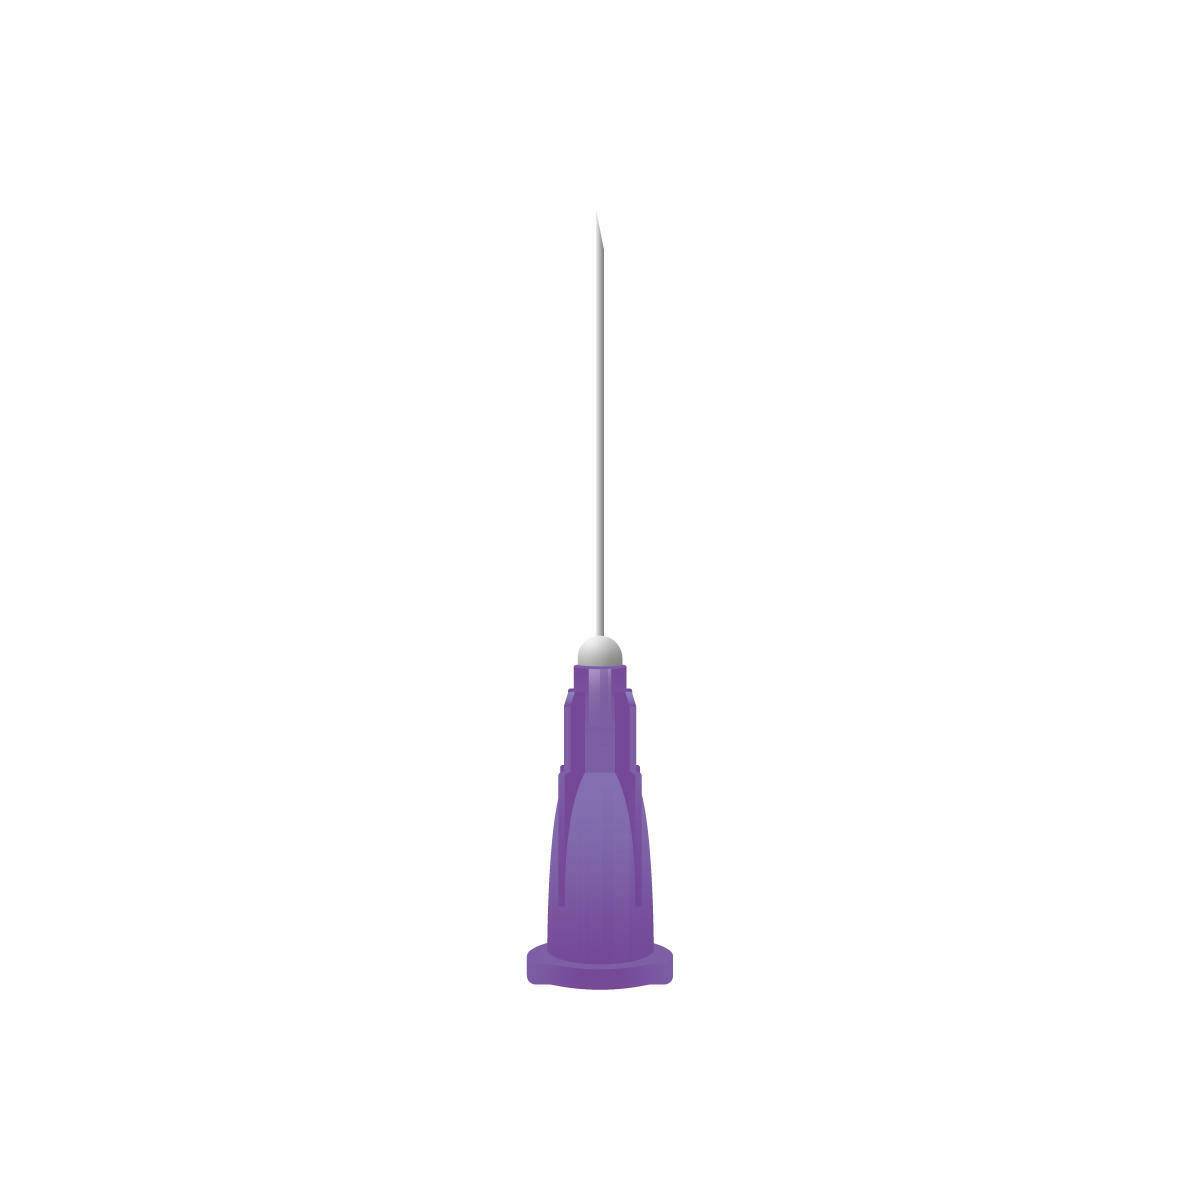 24g Purple 1 inch BD Microlance Needles (25mm x 0.55mm) 304100 UKMEDI.CO.UK